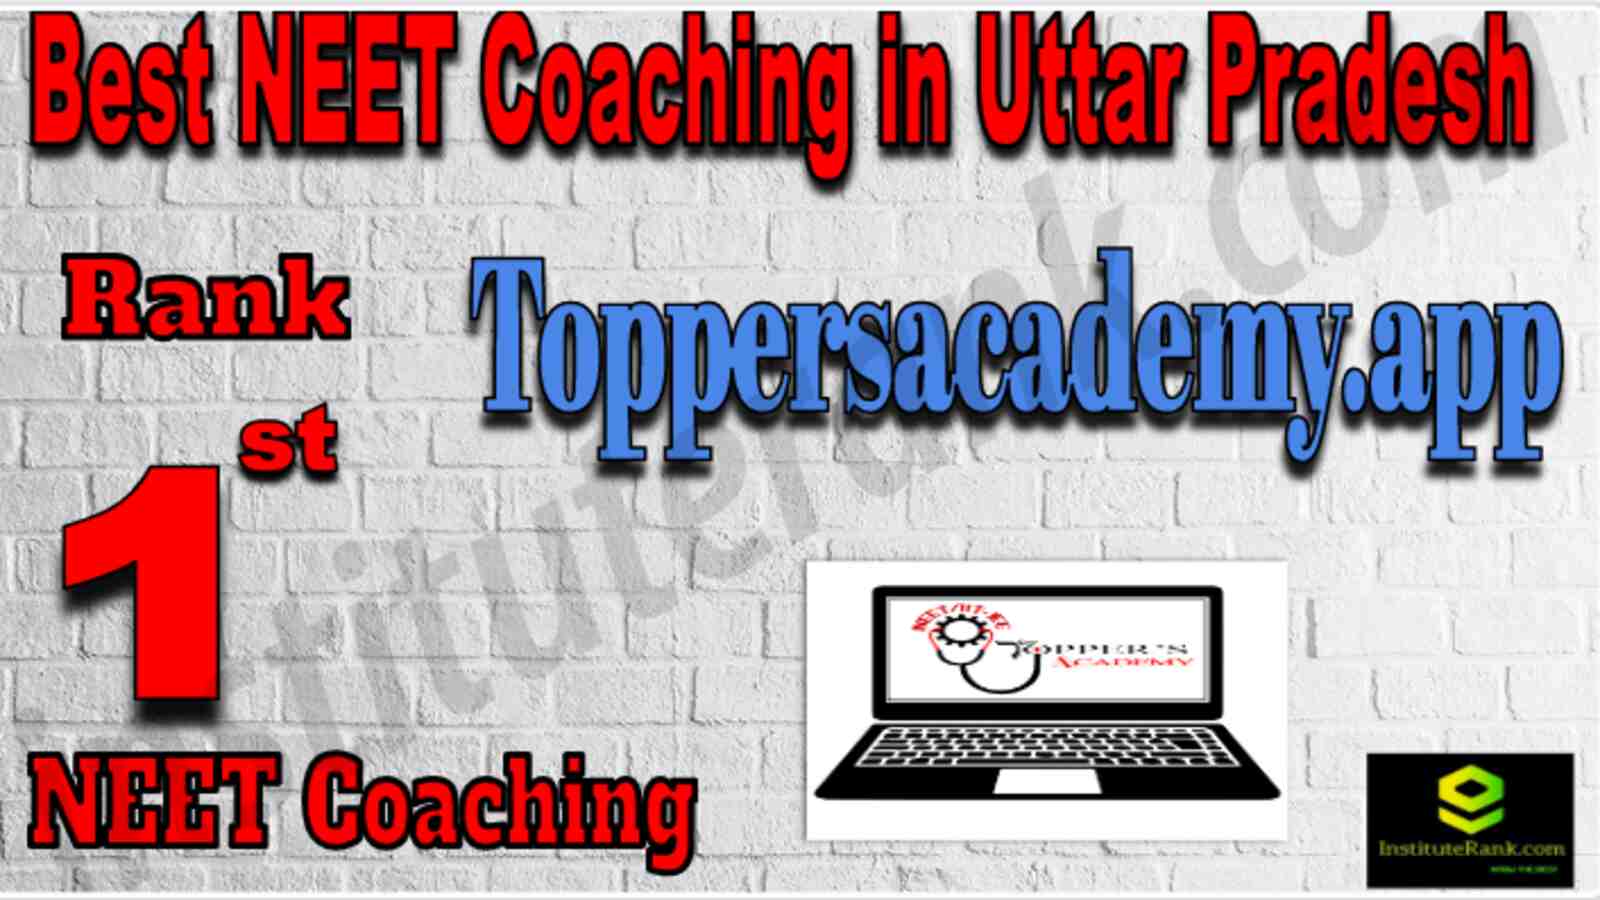 Rank 1 Best NEET Coaching in Uttar Pradesh 2022